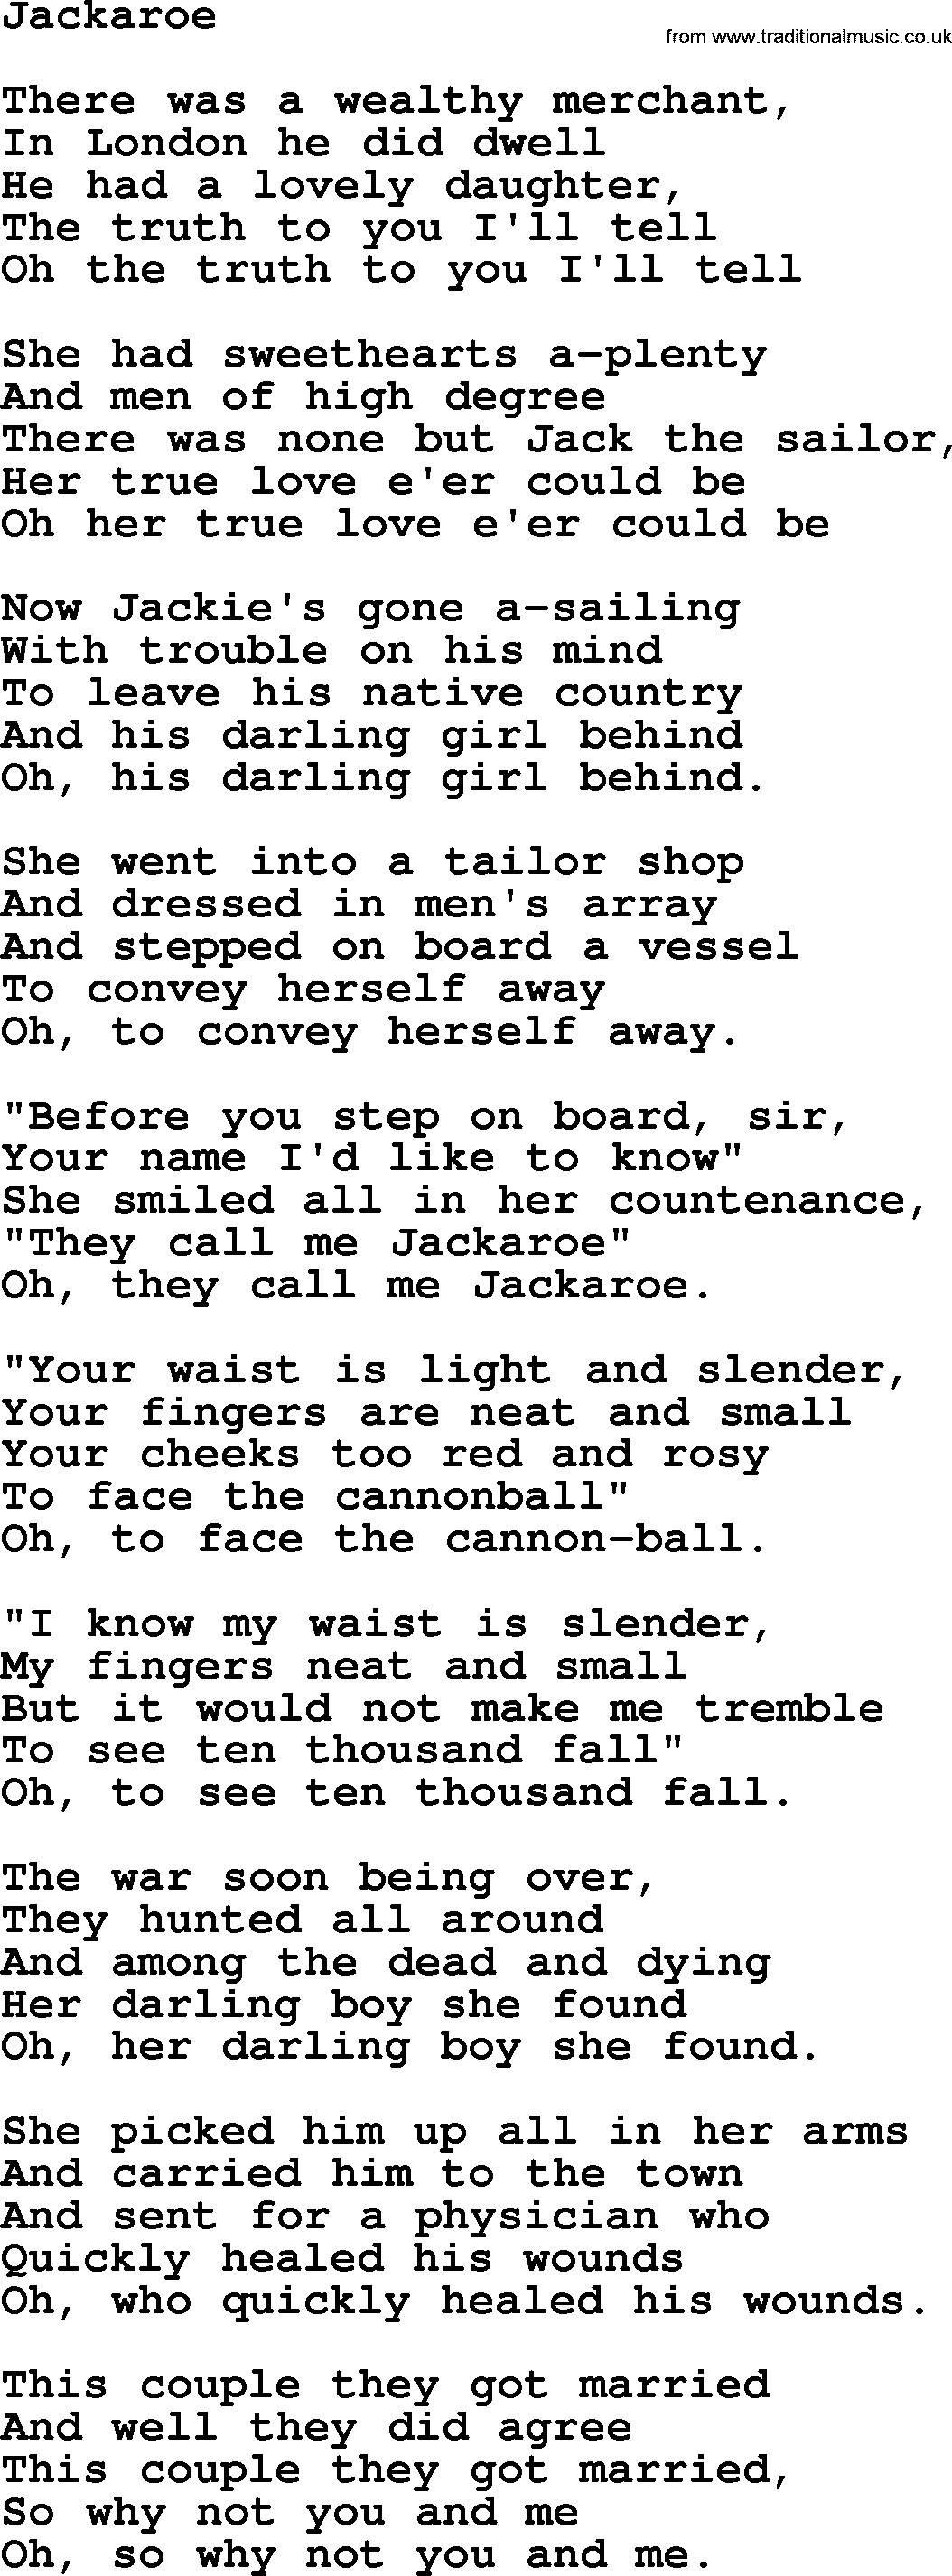 Joan Baez song Jackaroe, lyrics